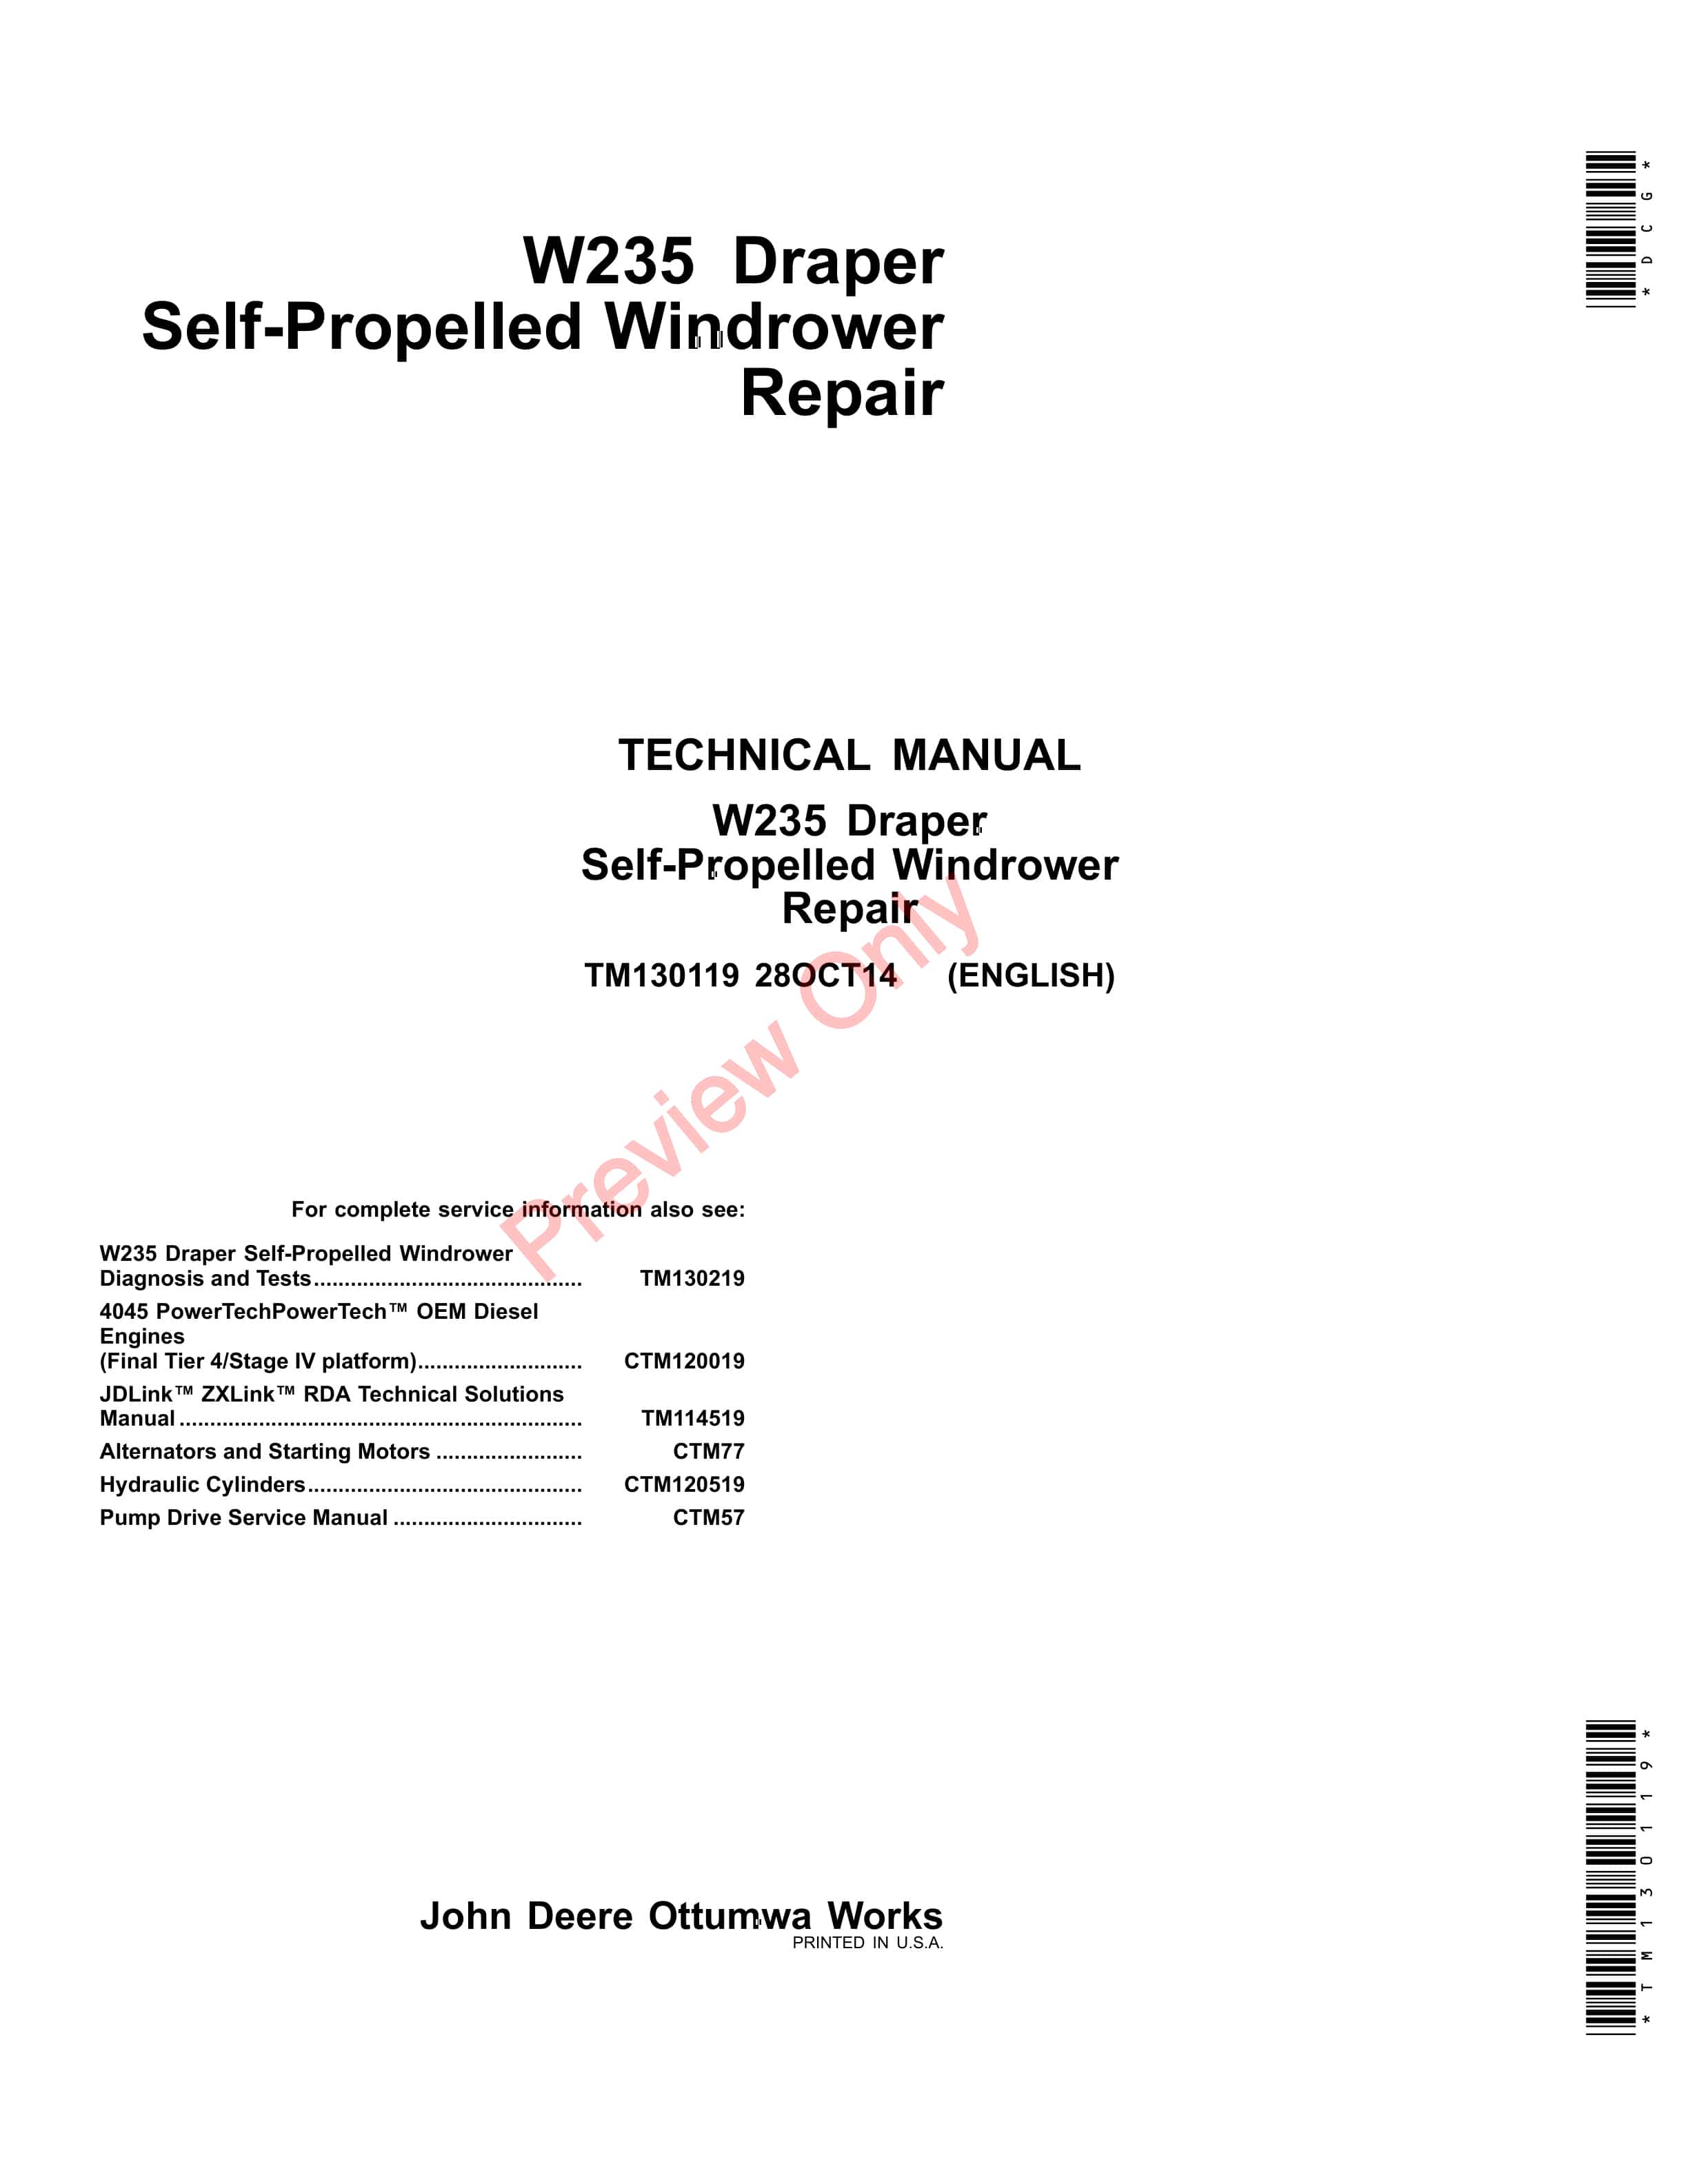 John Deere W235 Draper Self-Propelled Windrower Service Information TM130119 30NOV17-1